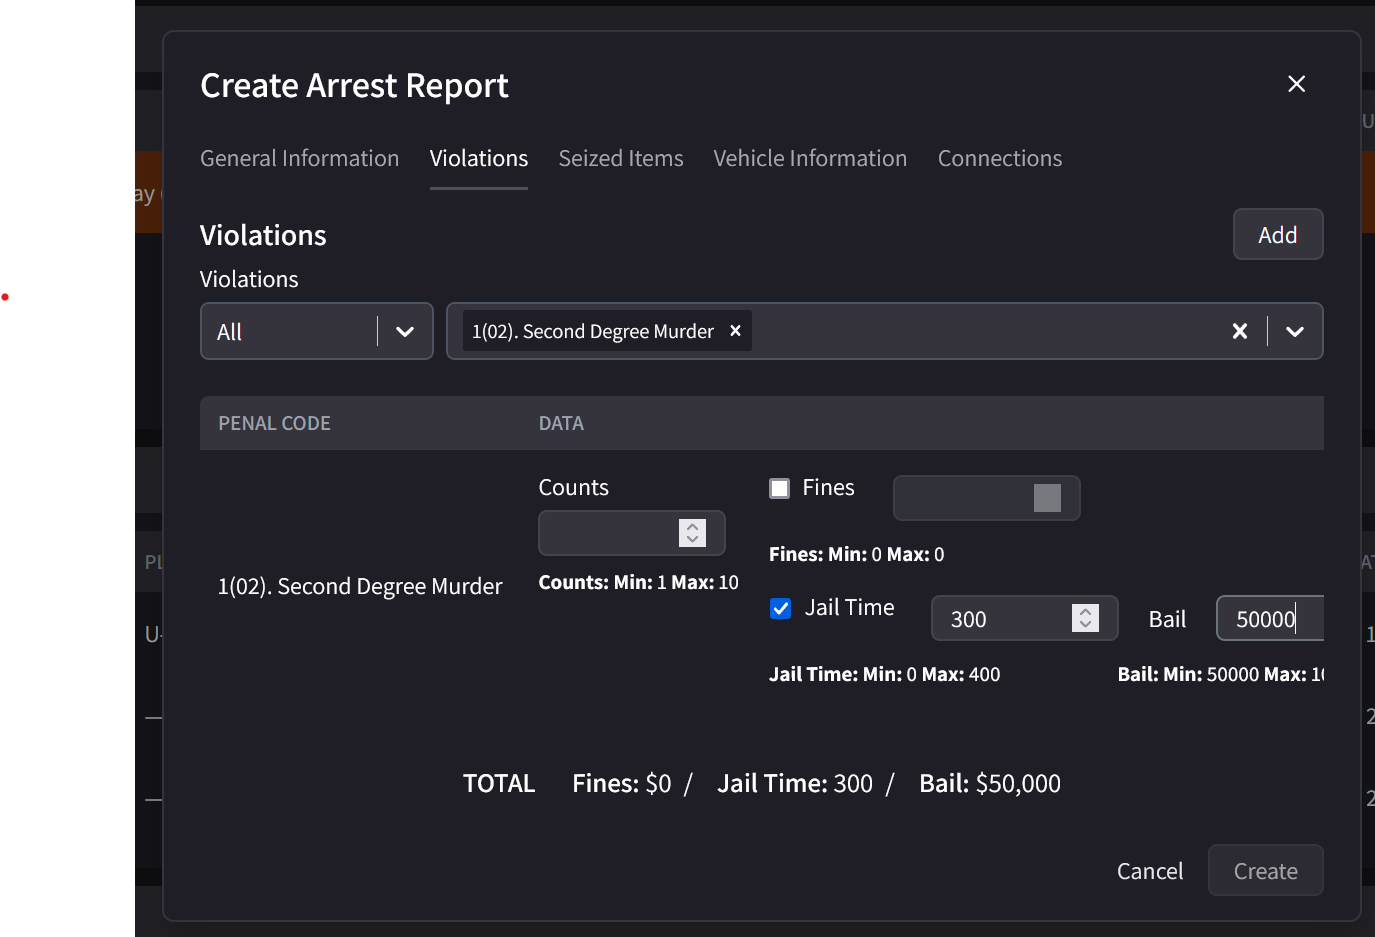 Arrest report creation